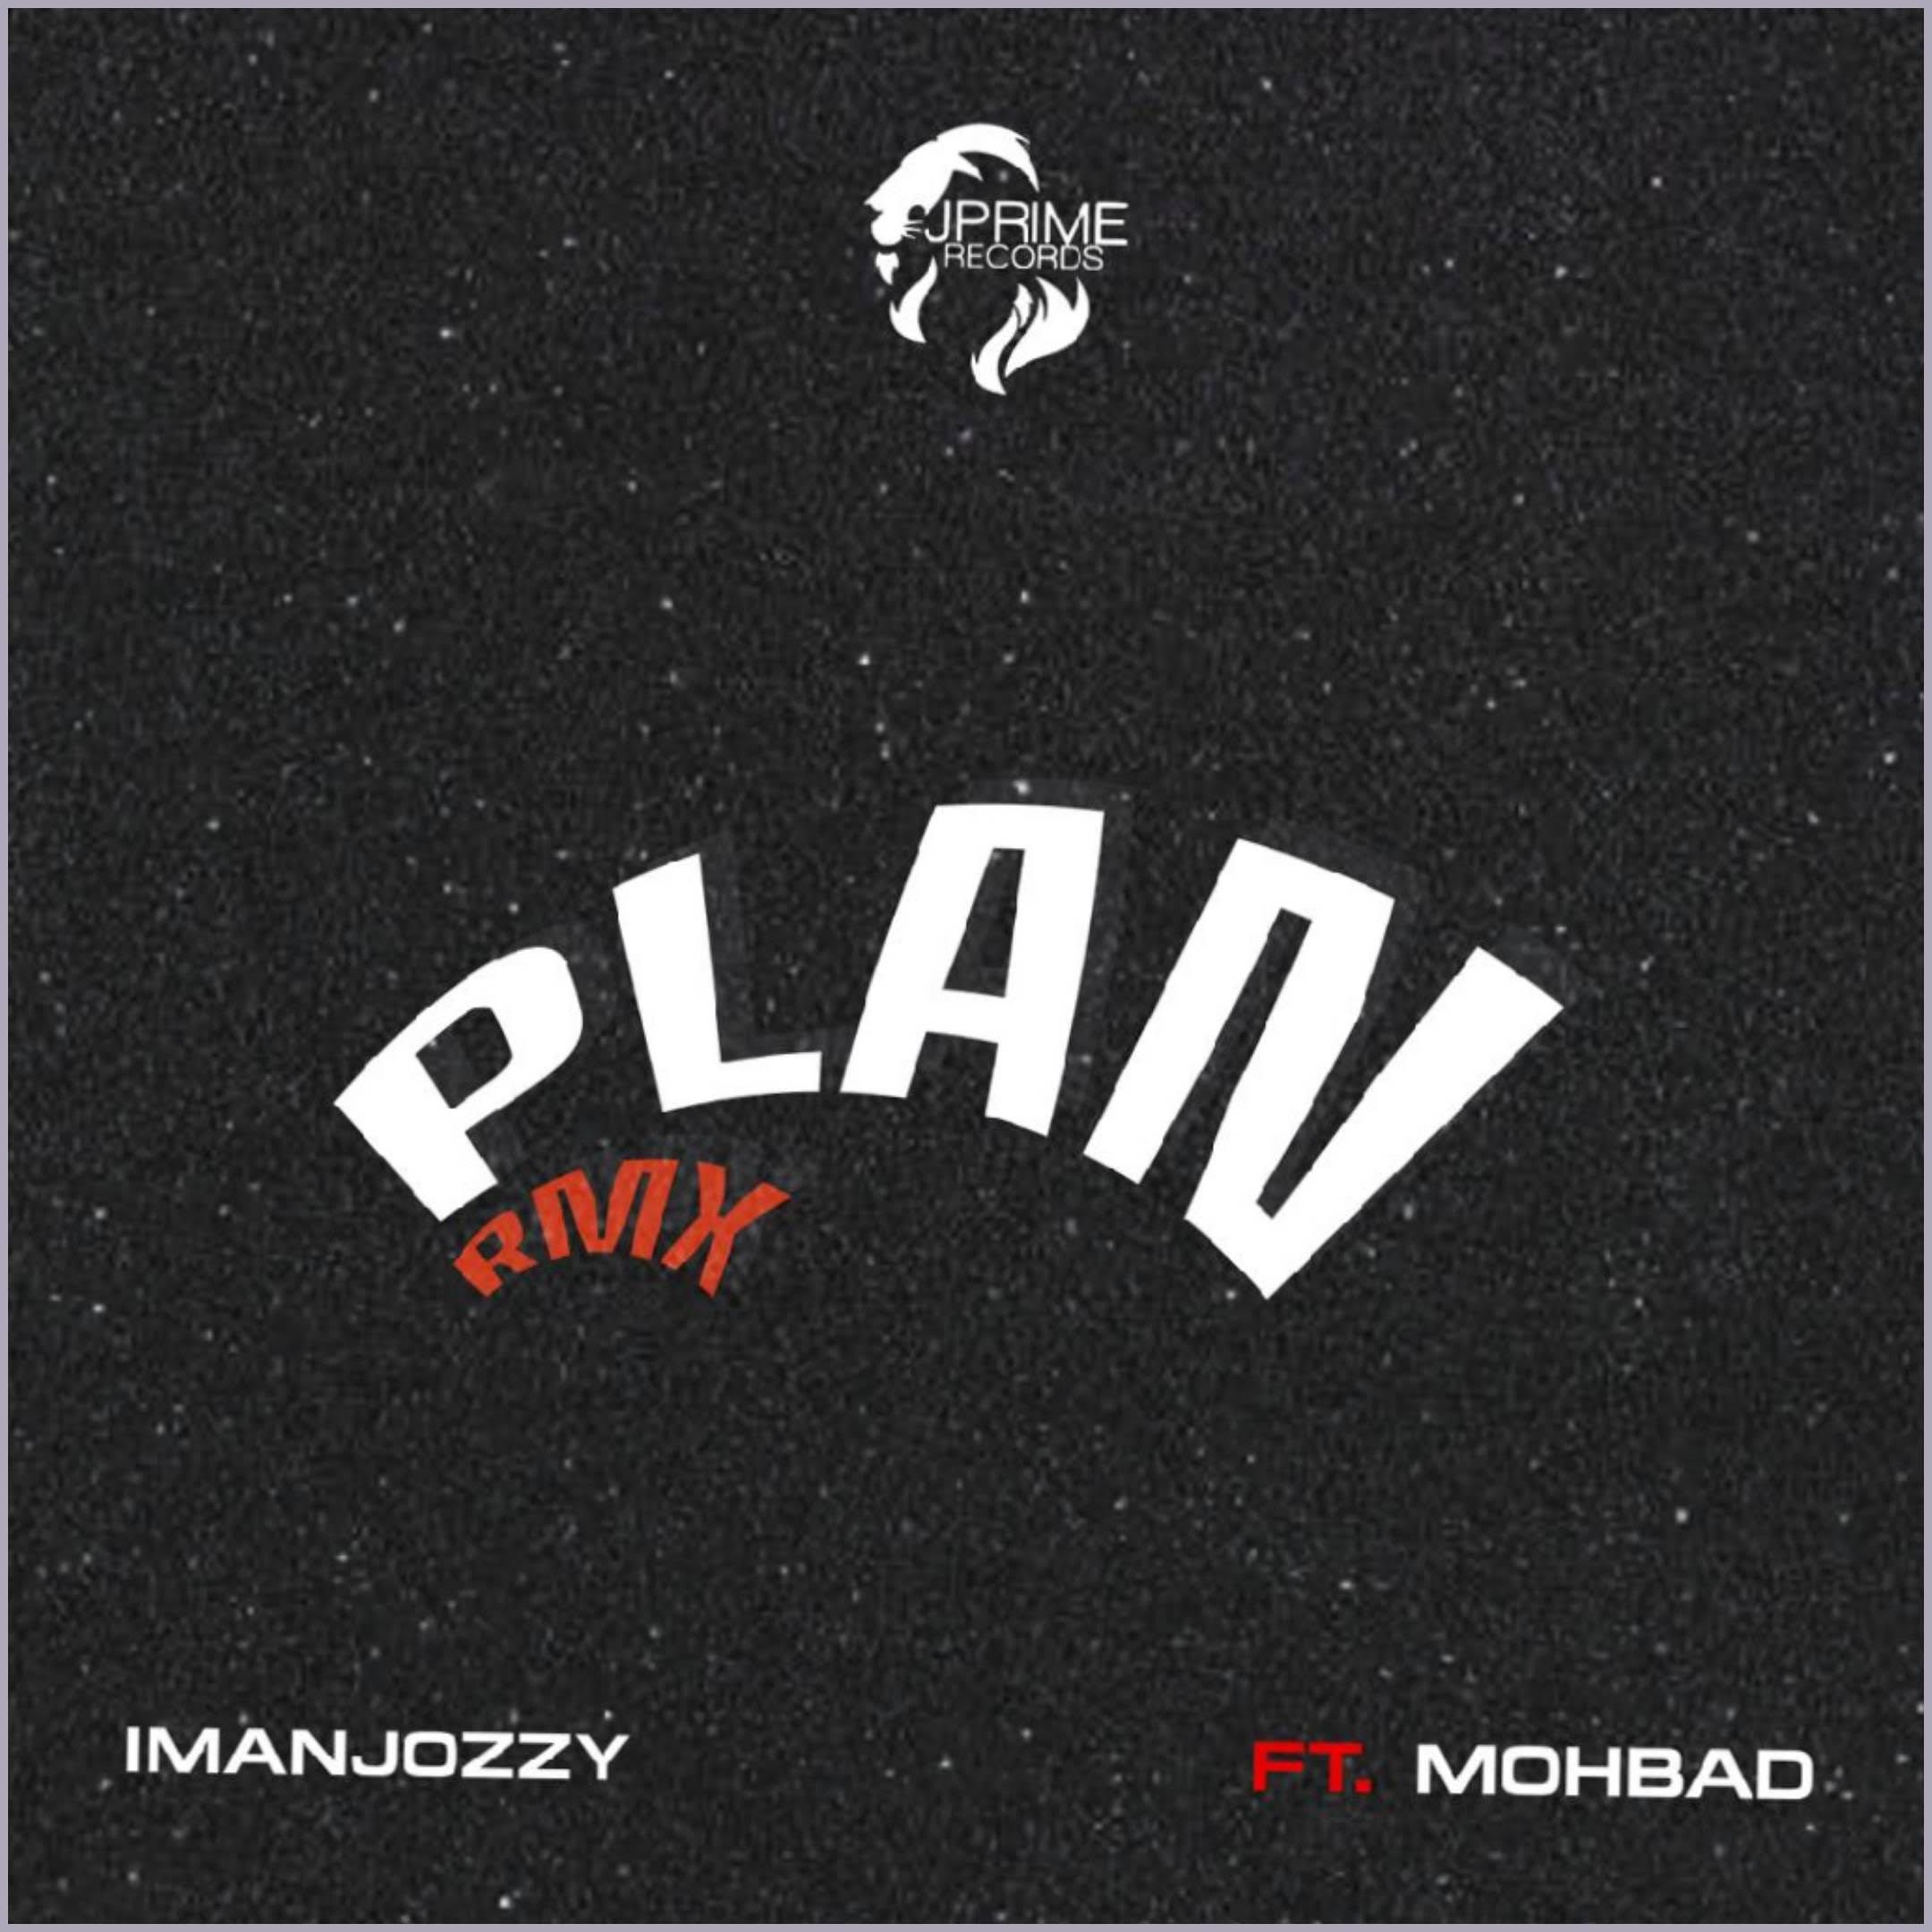 ImanJozzy - Plan (Remix) Ft. MohBad